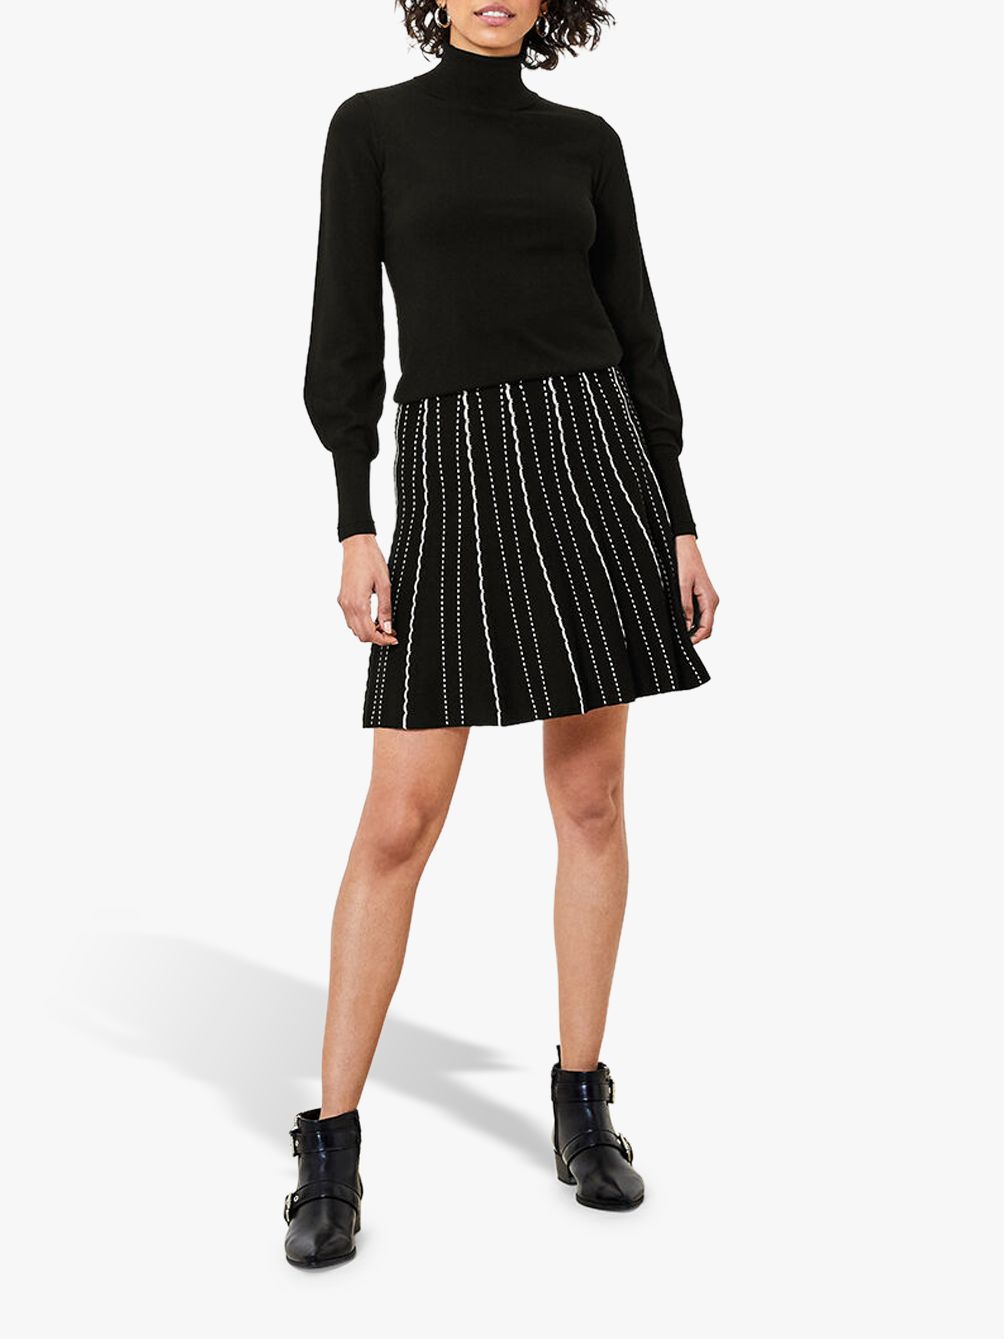 Oasis Scallop Dot Mini Skirt, Black/White